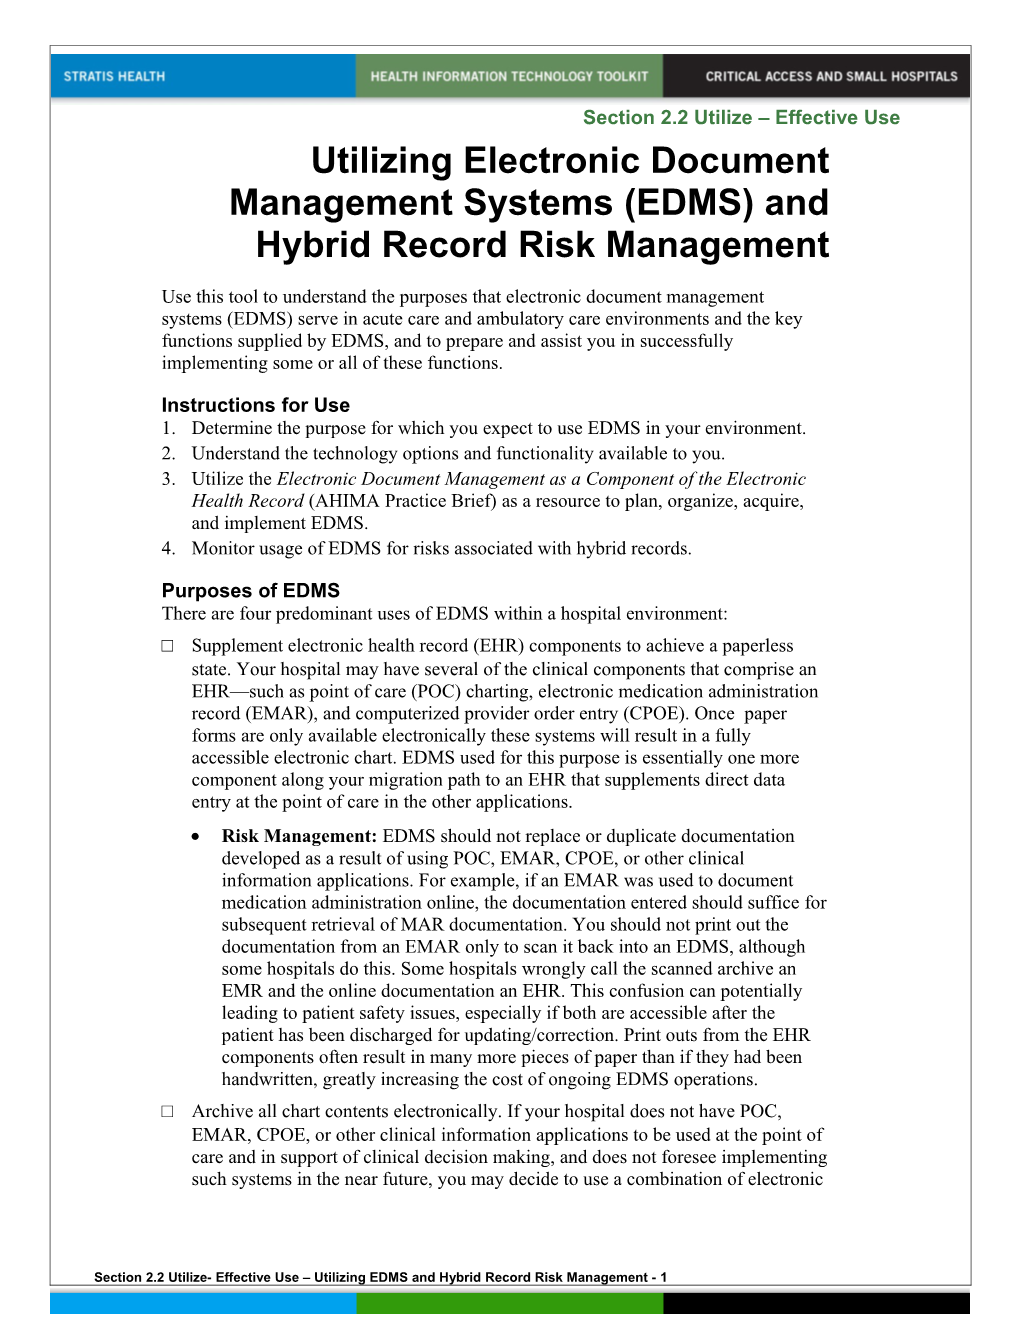 Utilizing Electronic Document Management Systems (EDMS) and Hybrid Record Risk Management